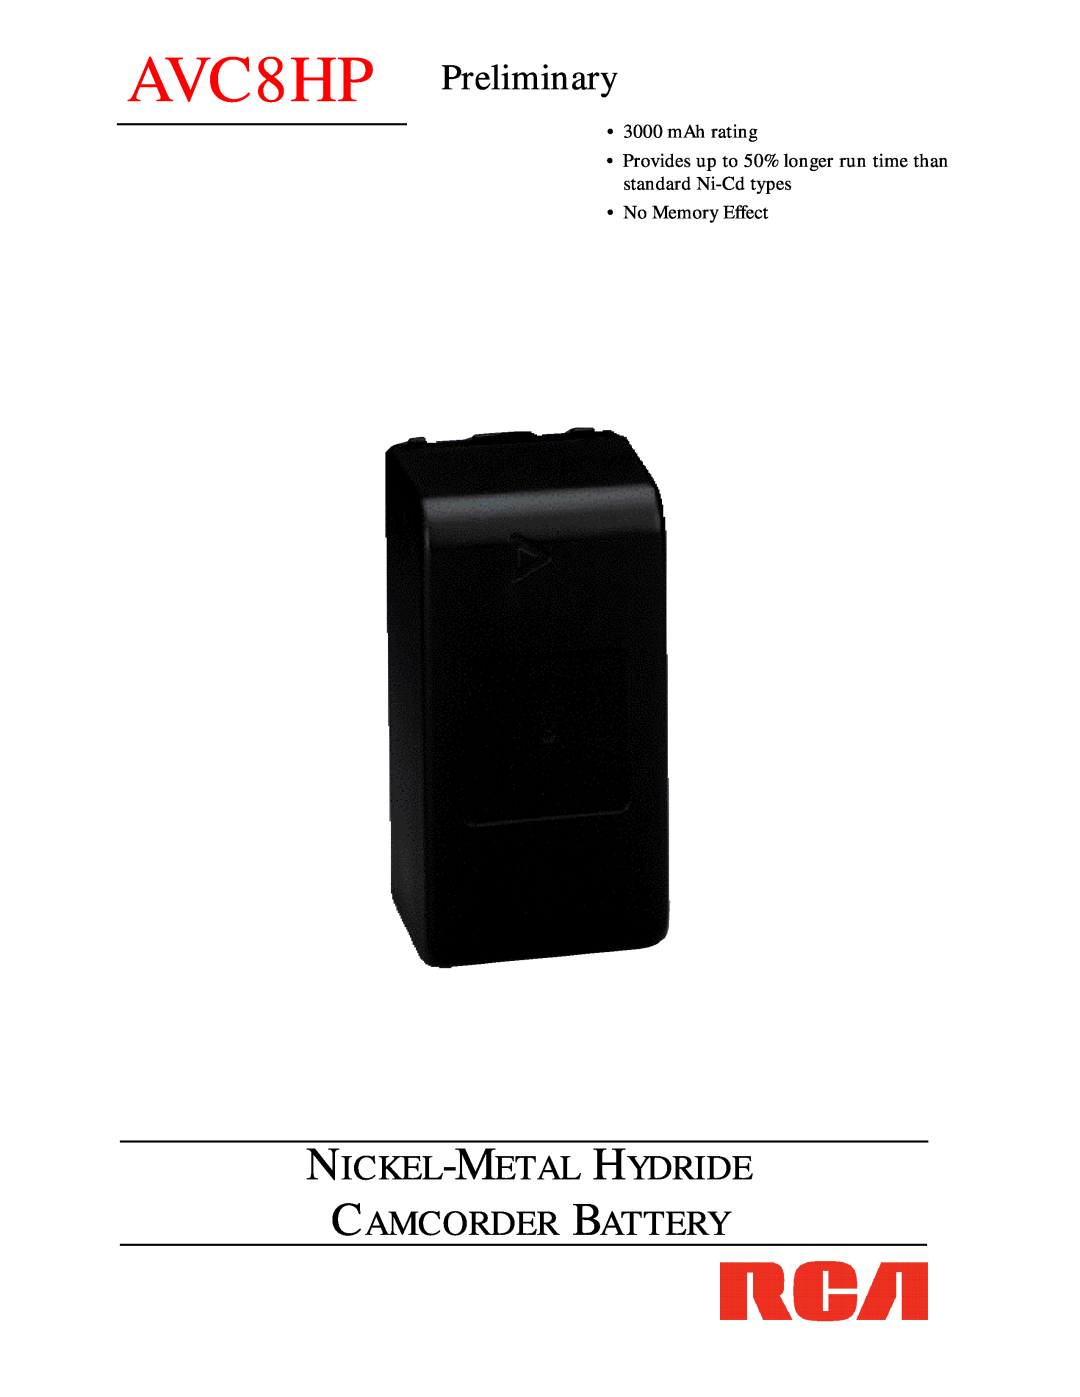 RCA manual AVC8HP Preliminary, Nickel-Metal Hydride Camcorder Battery, mAh rating, No Memory Effect 